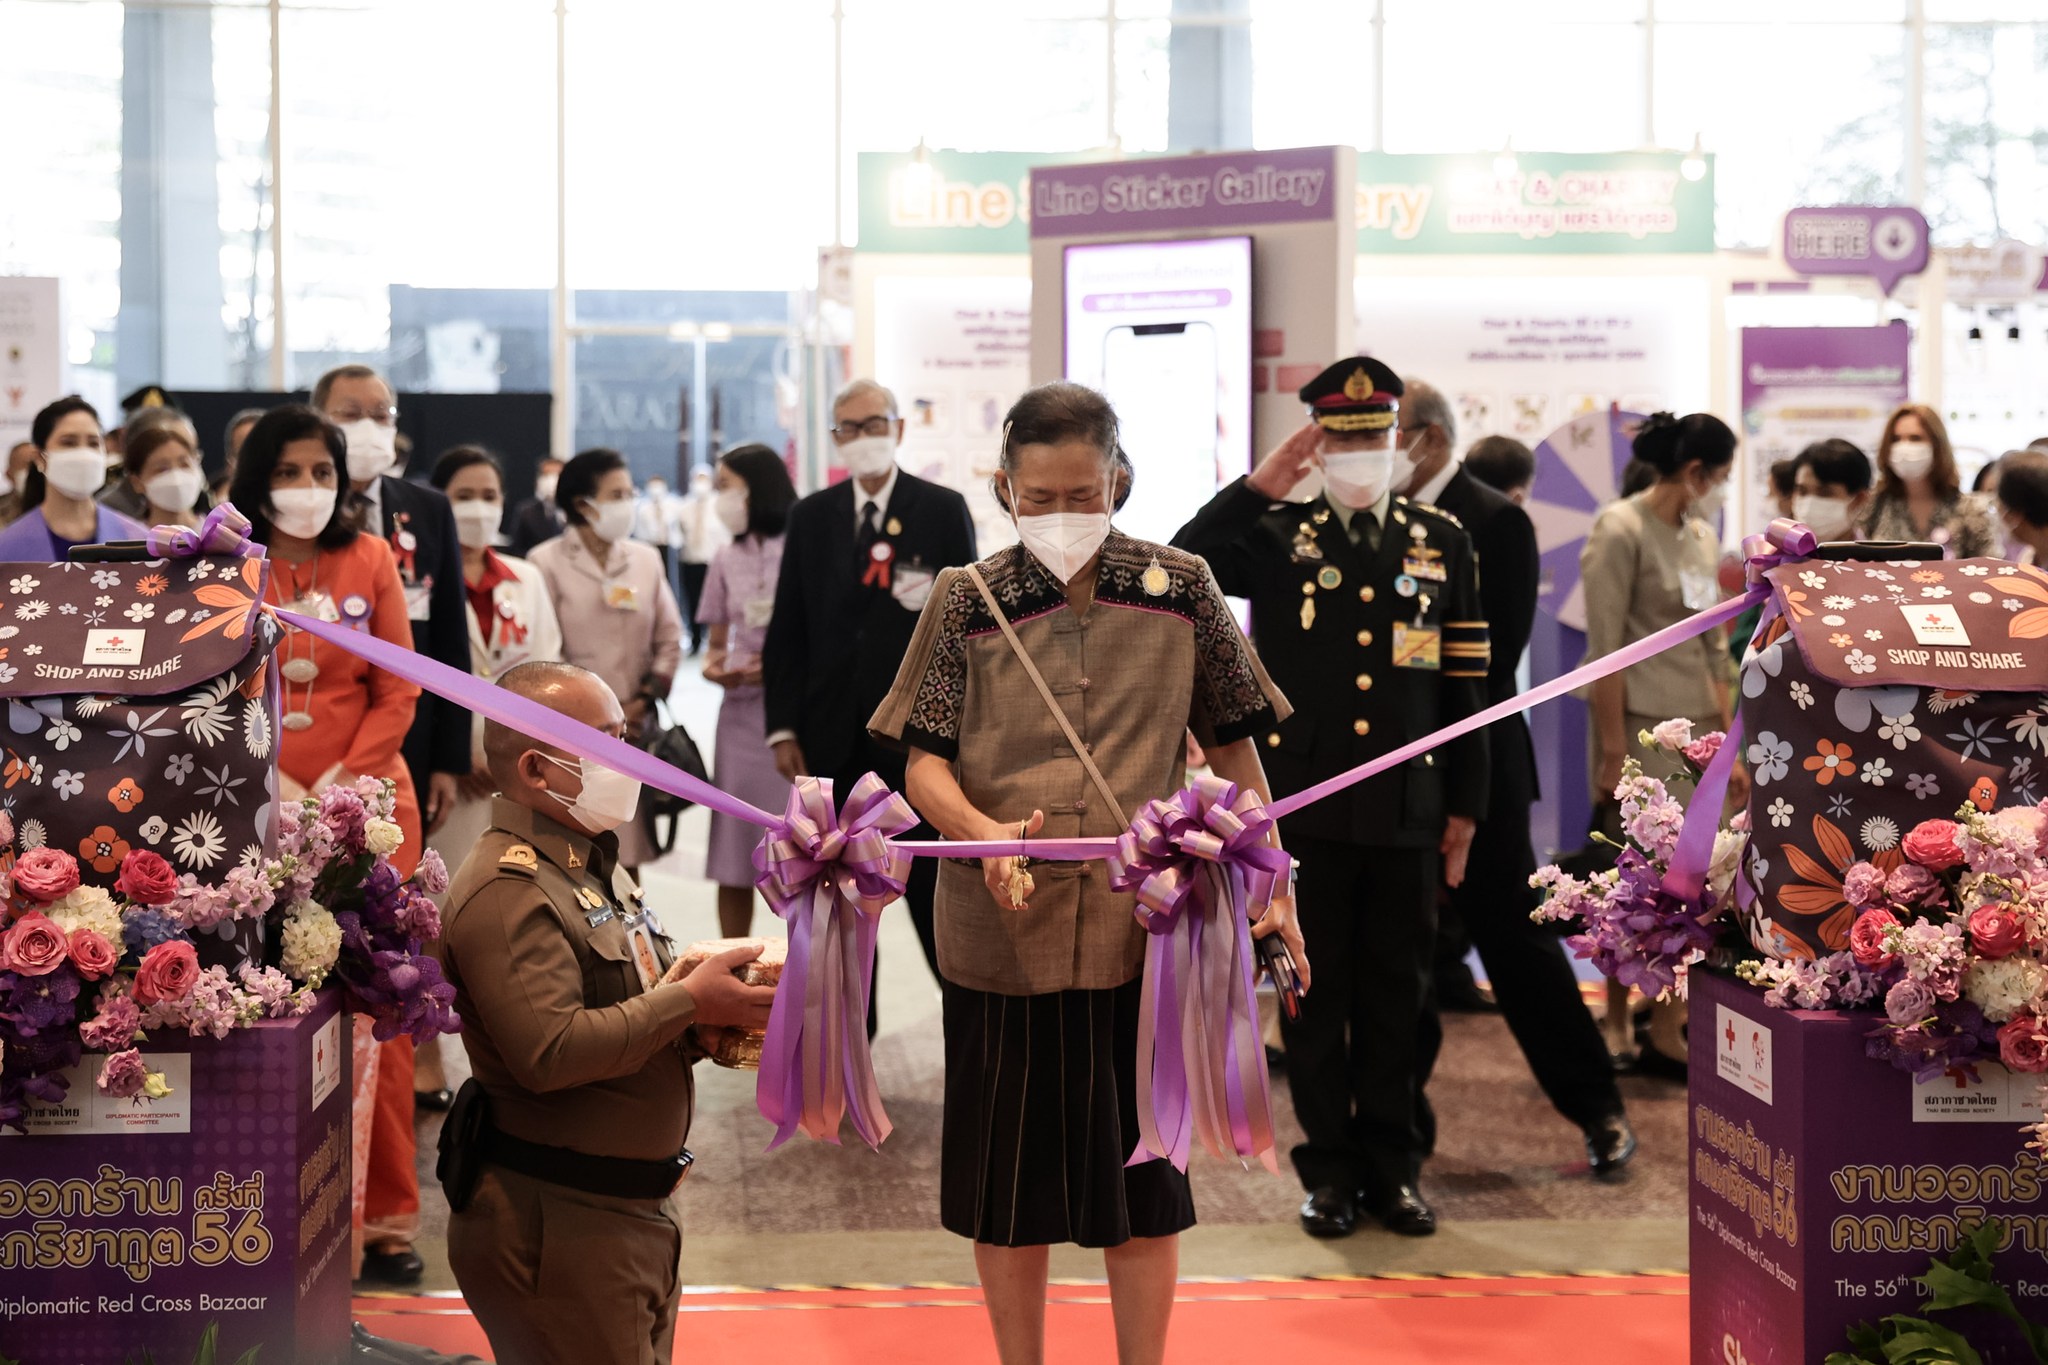 Her Royal Highness Princess Maha Chakri Sirindhorn opened the 56th Diplomatic Wife Fair.